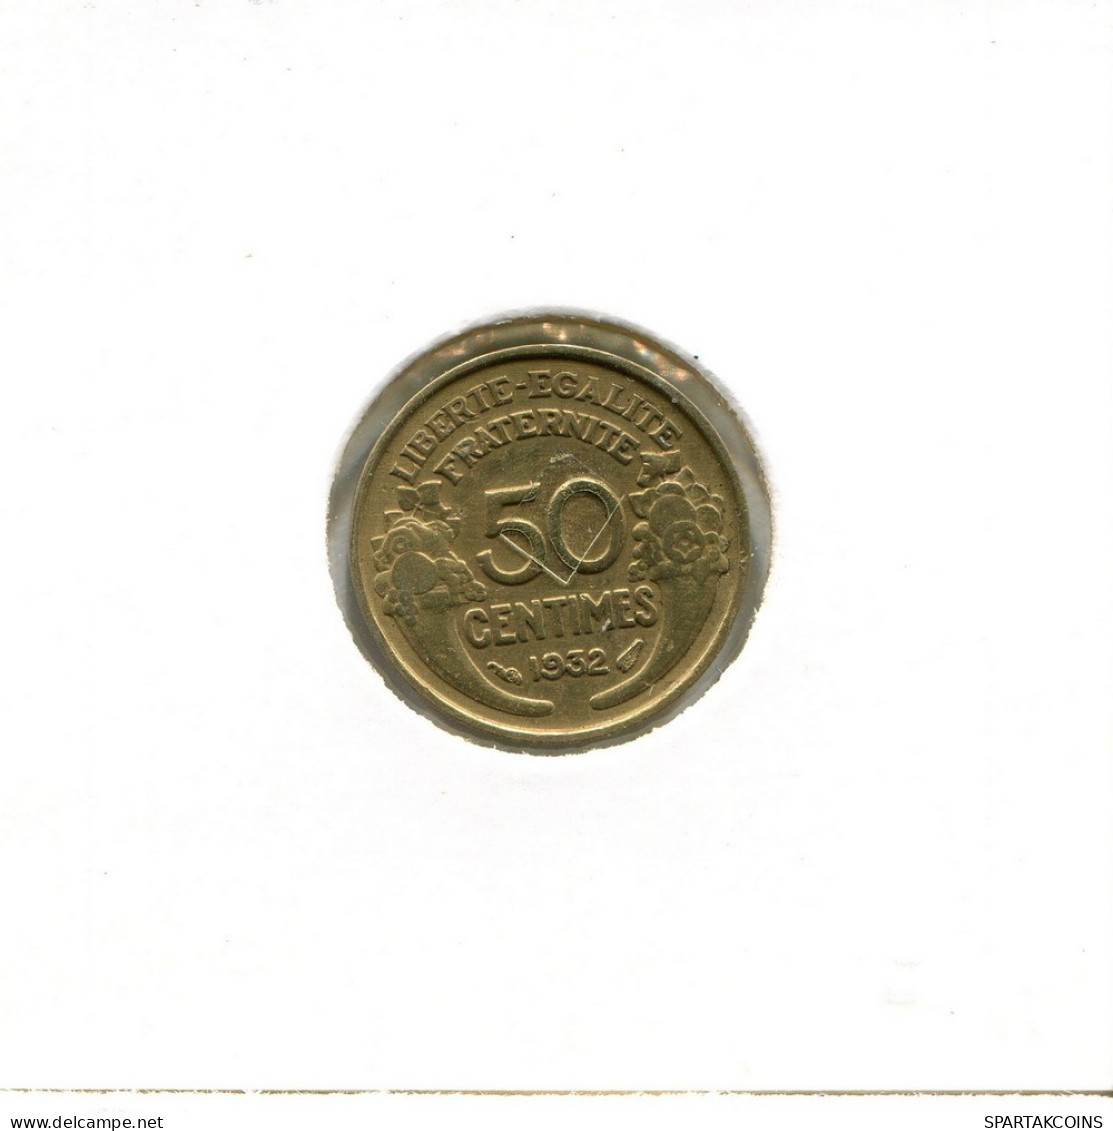 50 CENTIMES 1932 FRANKREICH FRANCE Französisch Münze #BB562.D.A - 50 Centimes